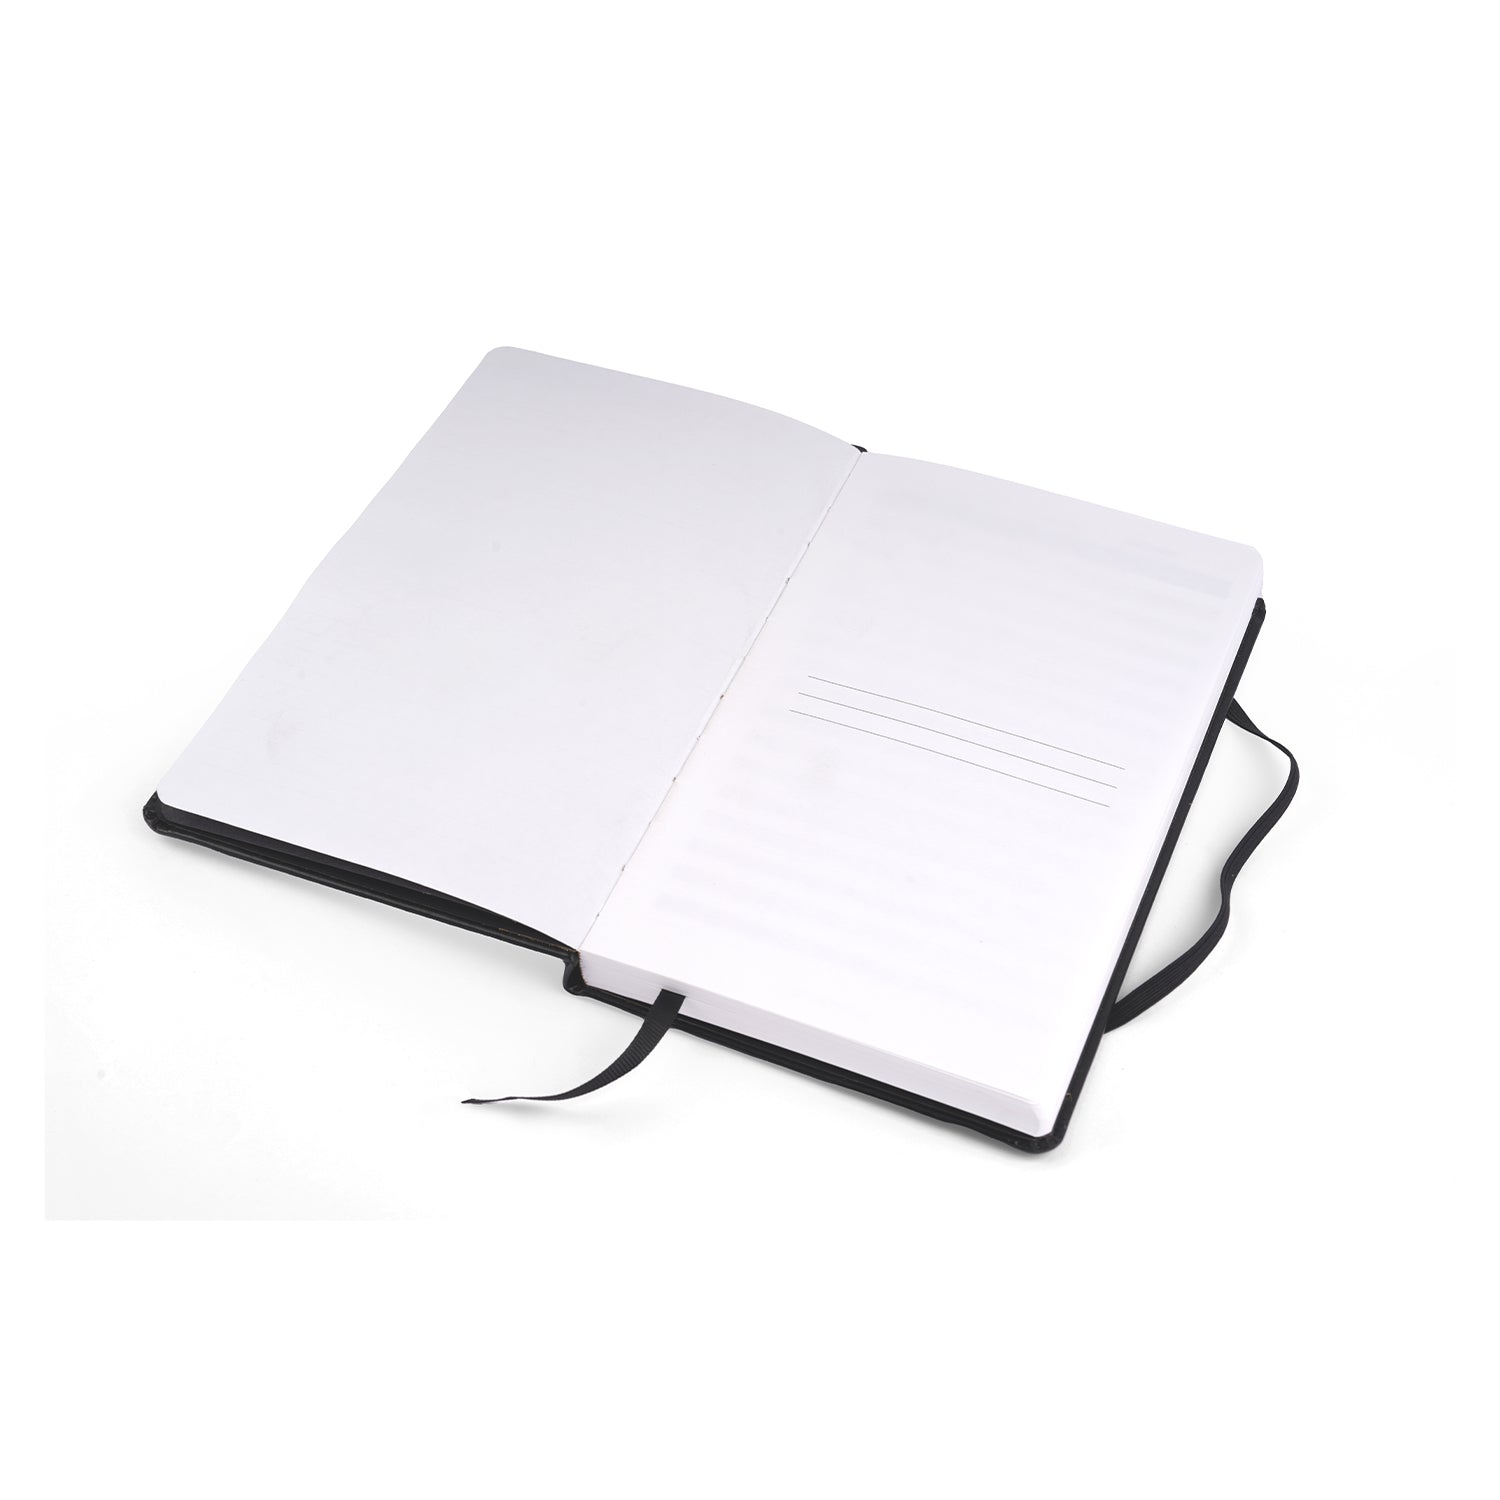 Sheaffer® Gift Set ft. Glossy Black S300 9312 Ballpoint Pen with Chrome Trim and Medium Notebook